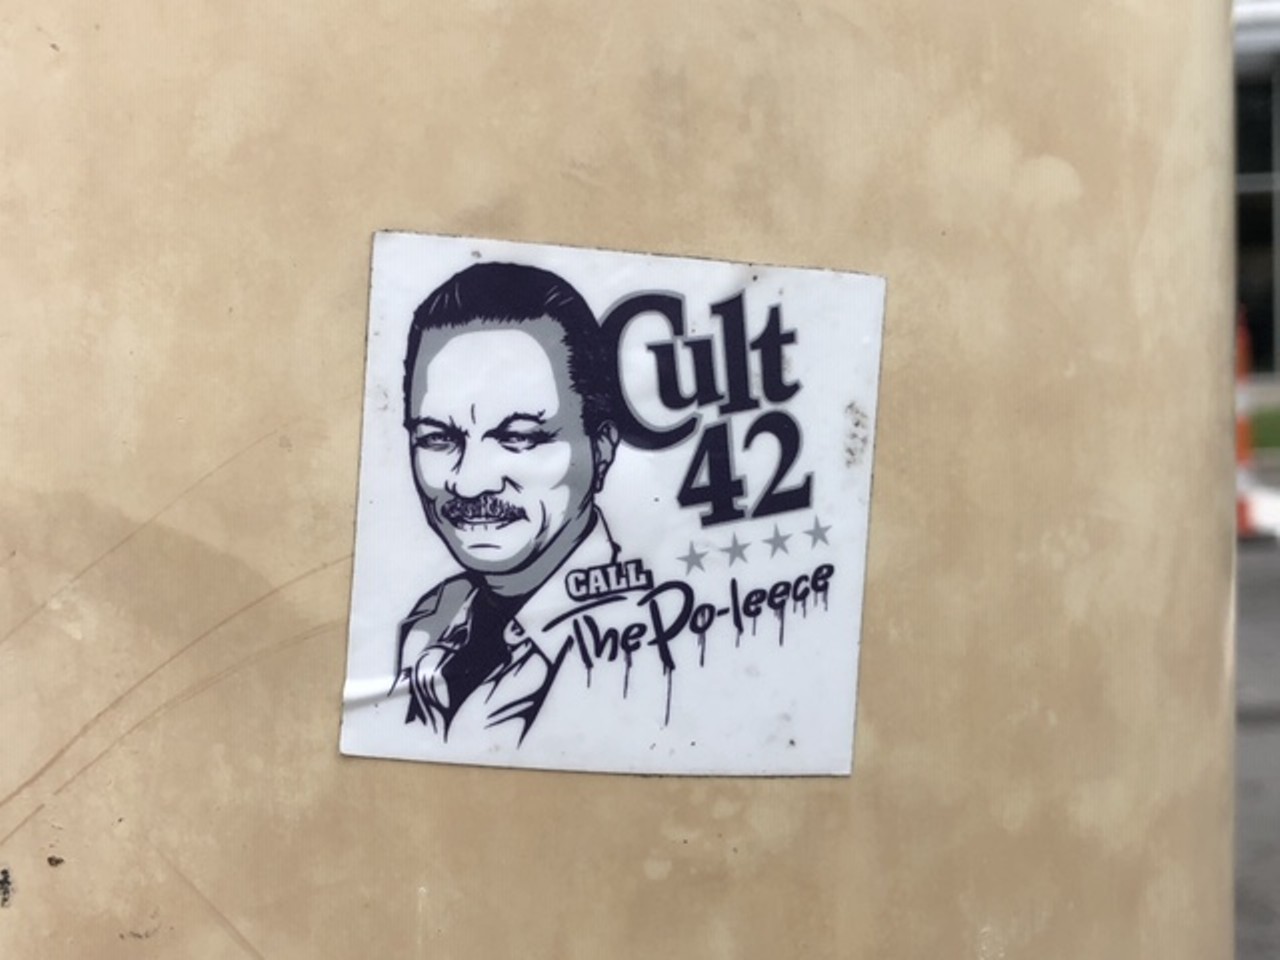 Creative, quirky, unforgettable stickers found in Detroit